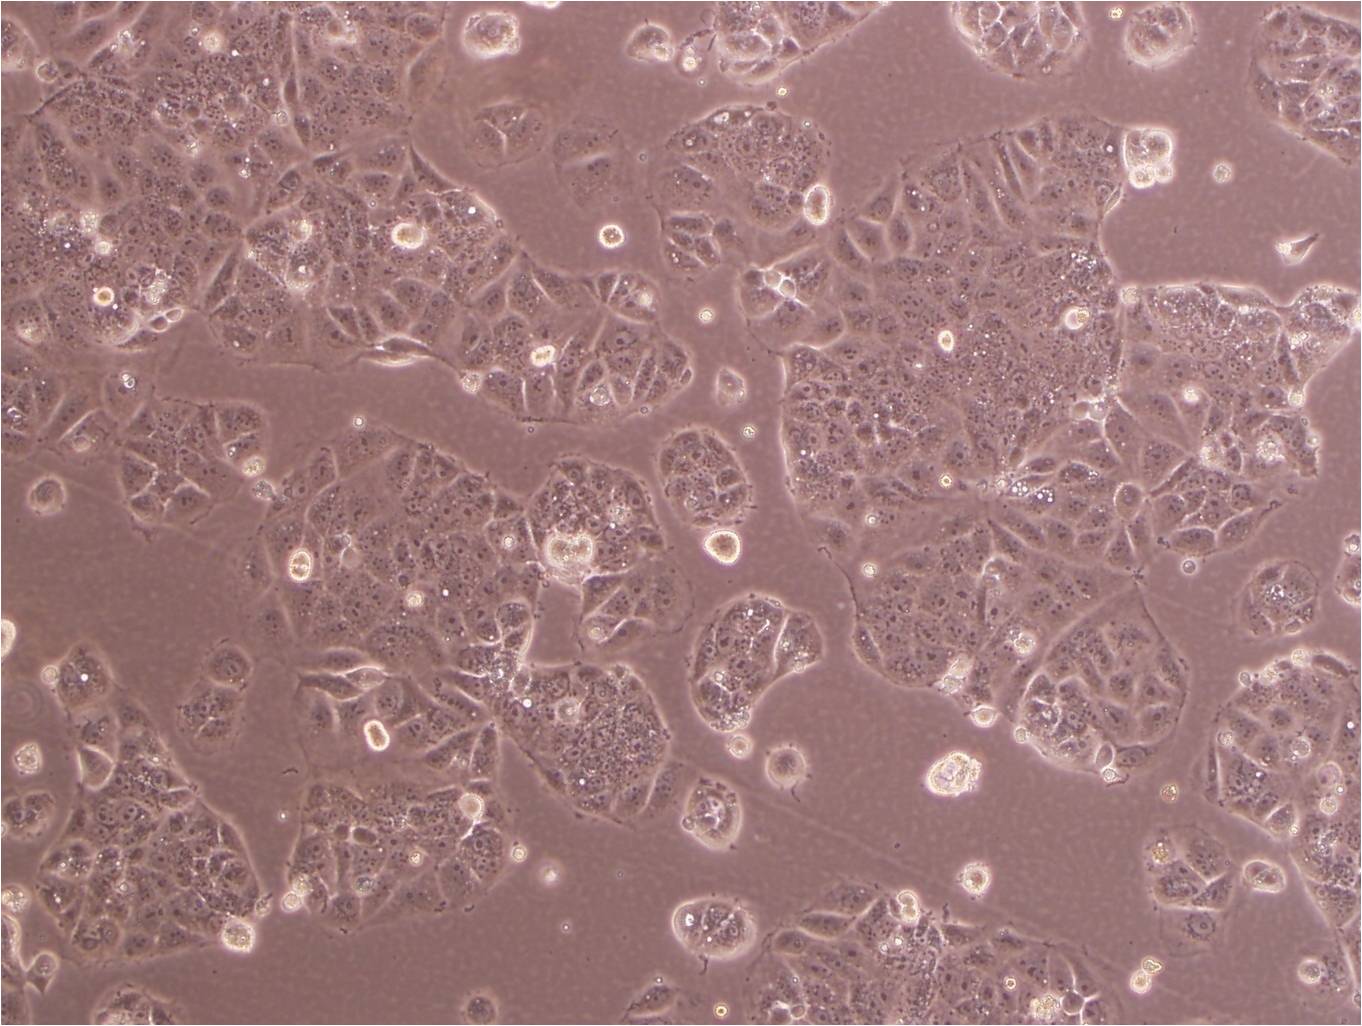 SL1 epithelioid cells人胚肺转化细胞系,SL1 epithelioid cells